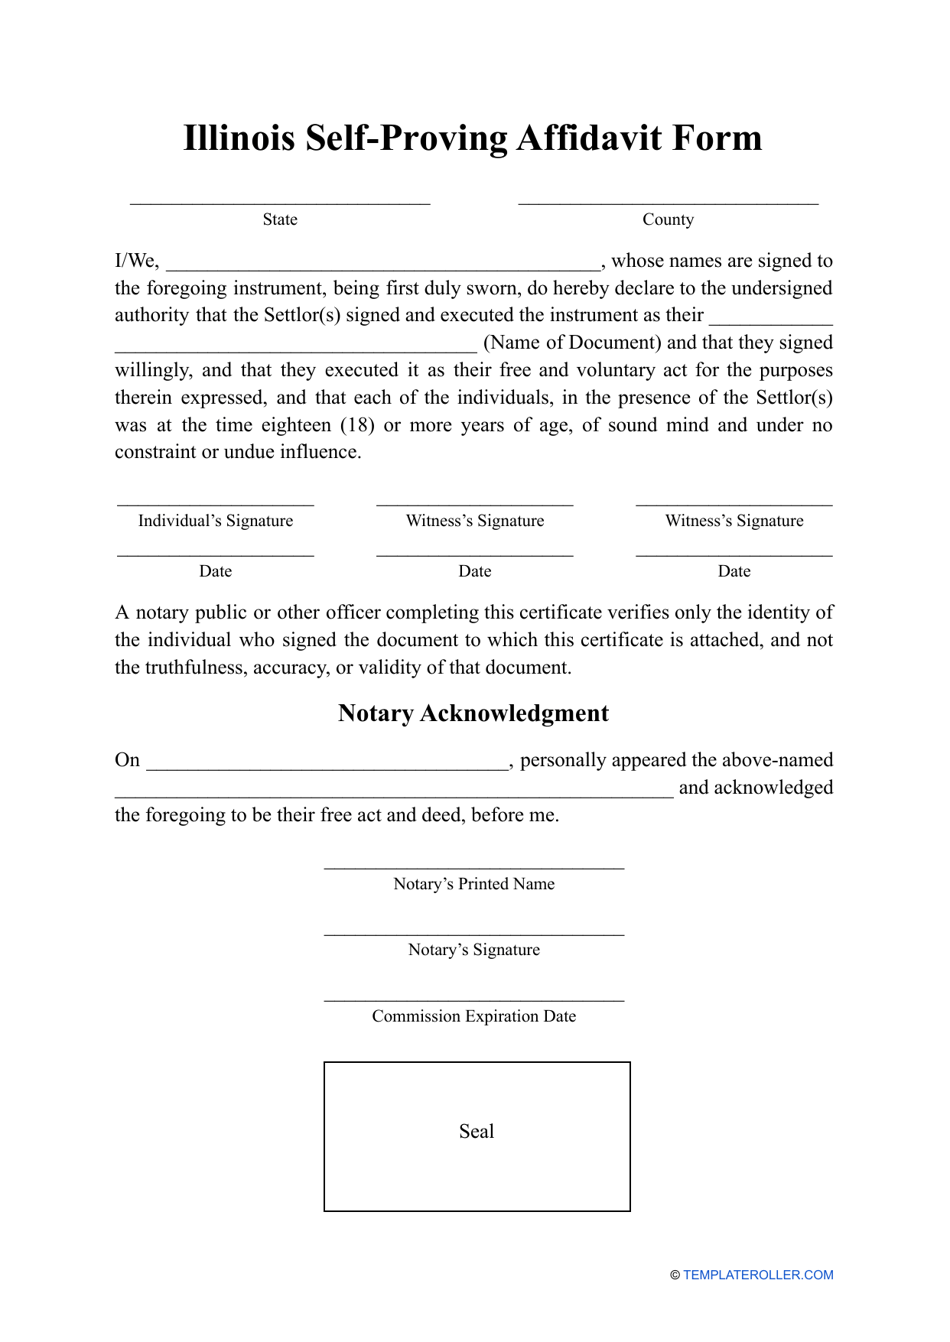 Self-proving Affidavit Form - Illinois, Page 1